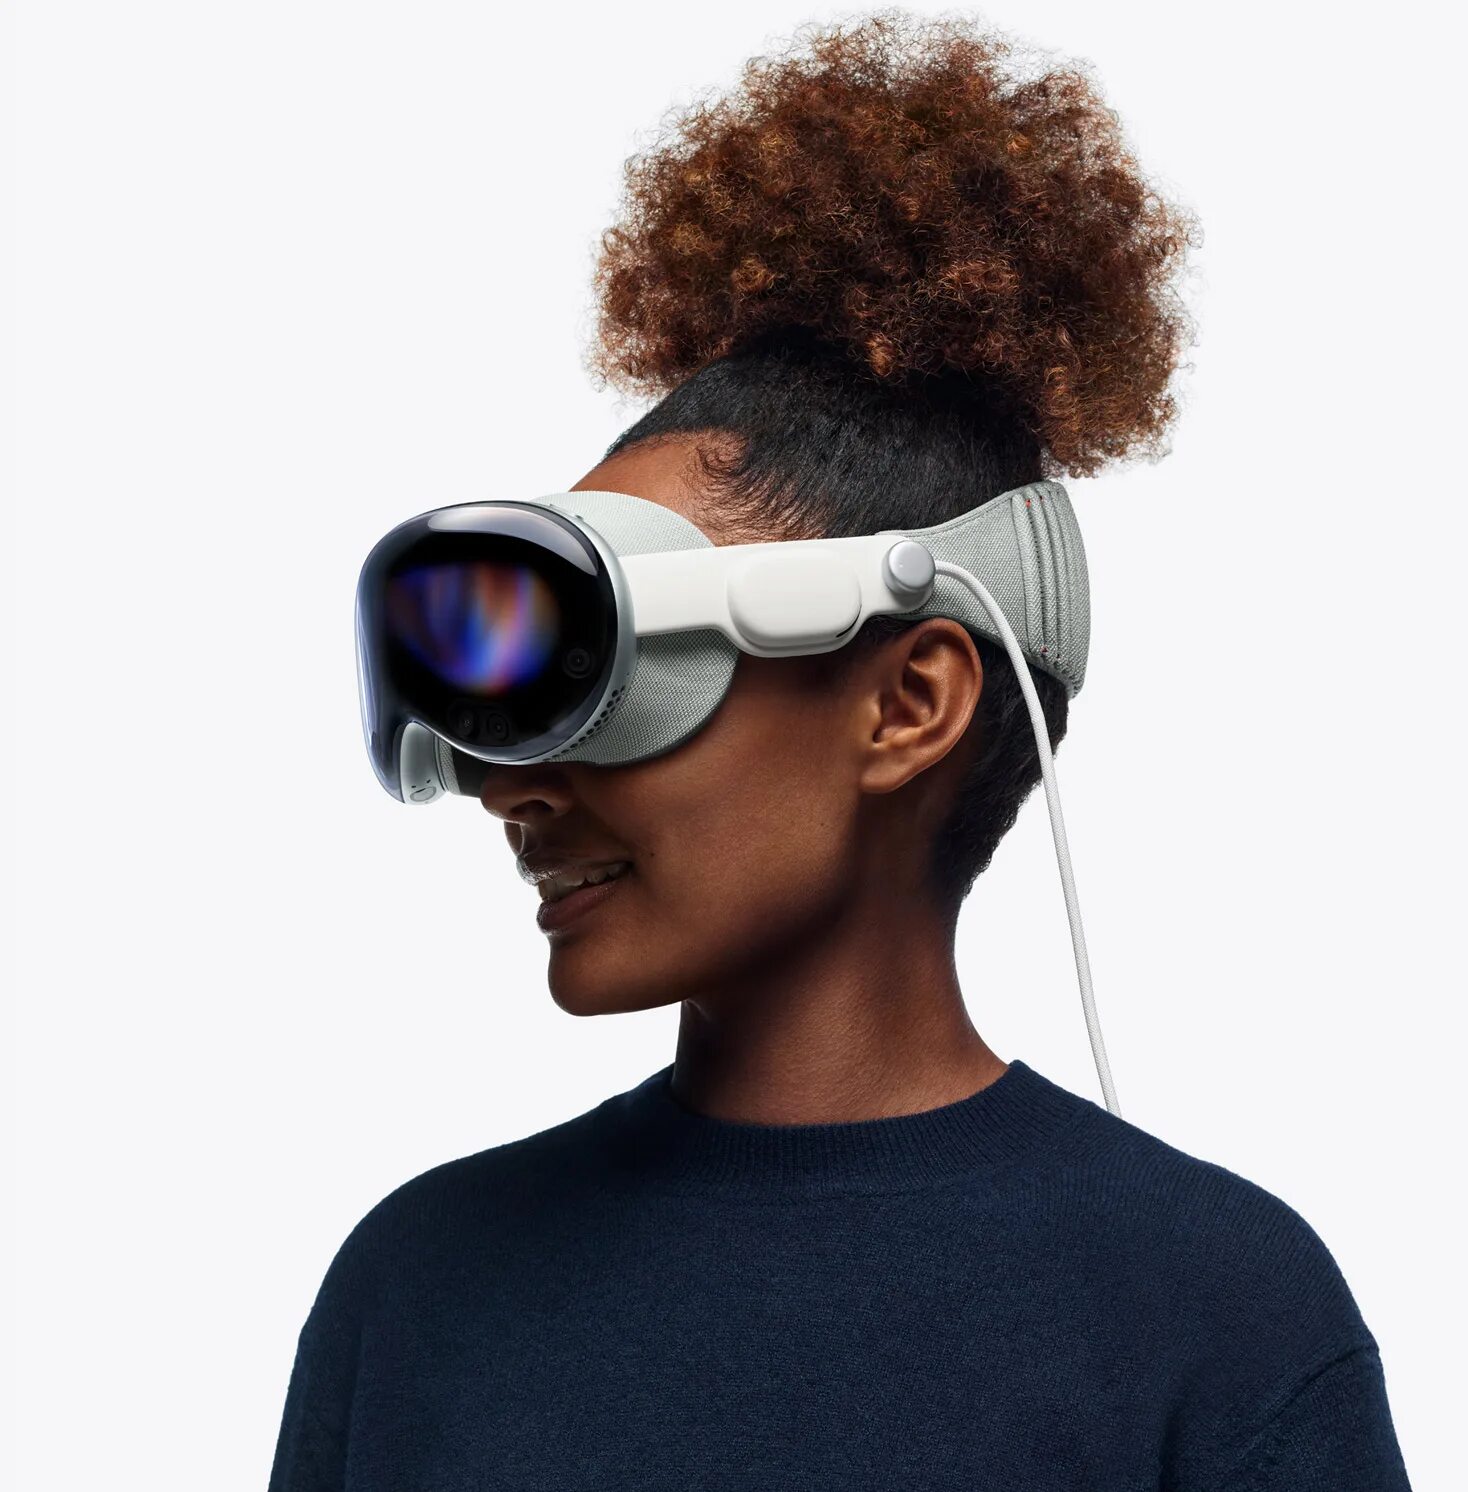 Очки Apple Vision Pro. Очки эпл Вижин. Vision Pro очки виртуальной реальности. Очки смешанной реальности.